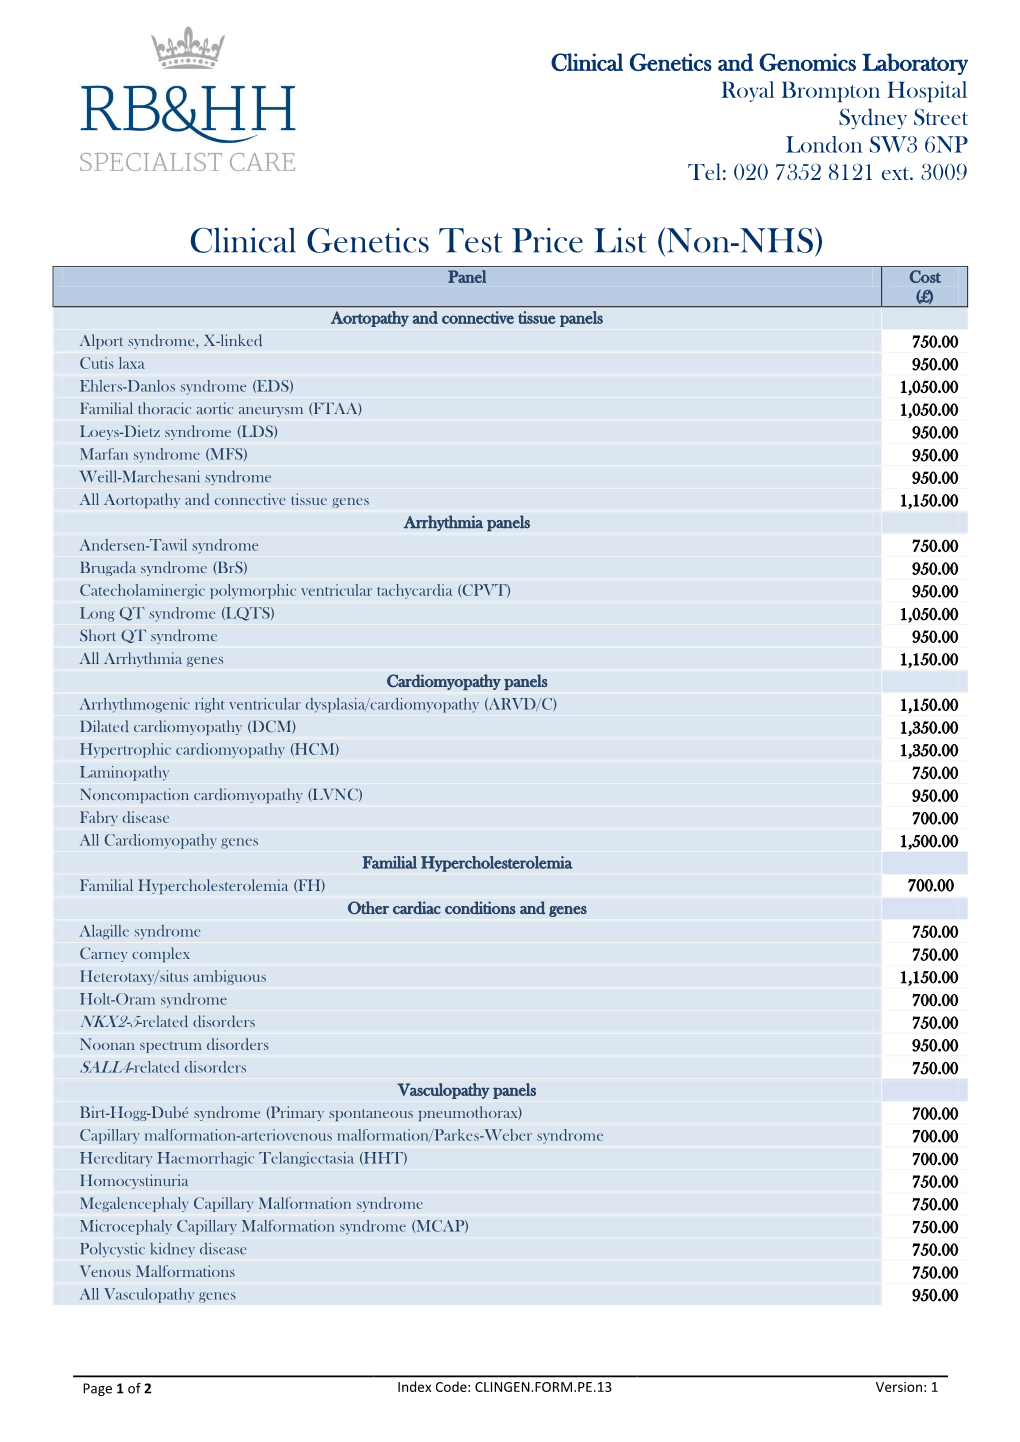 Clinical Genetics Test Price List